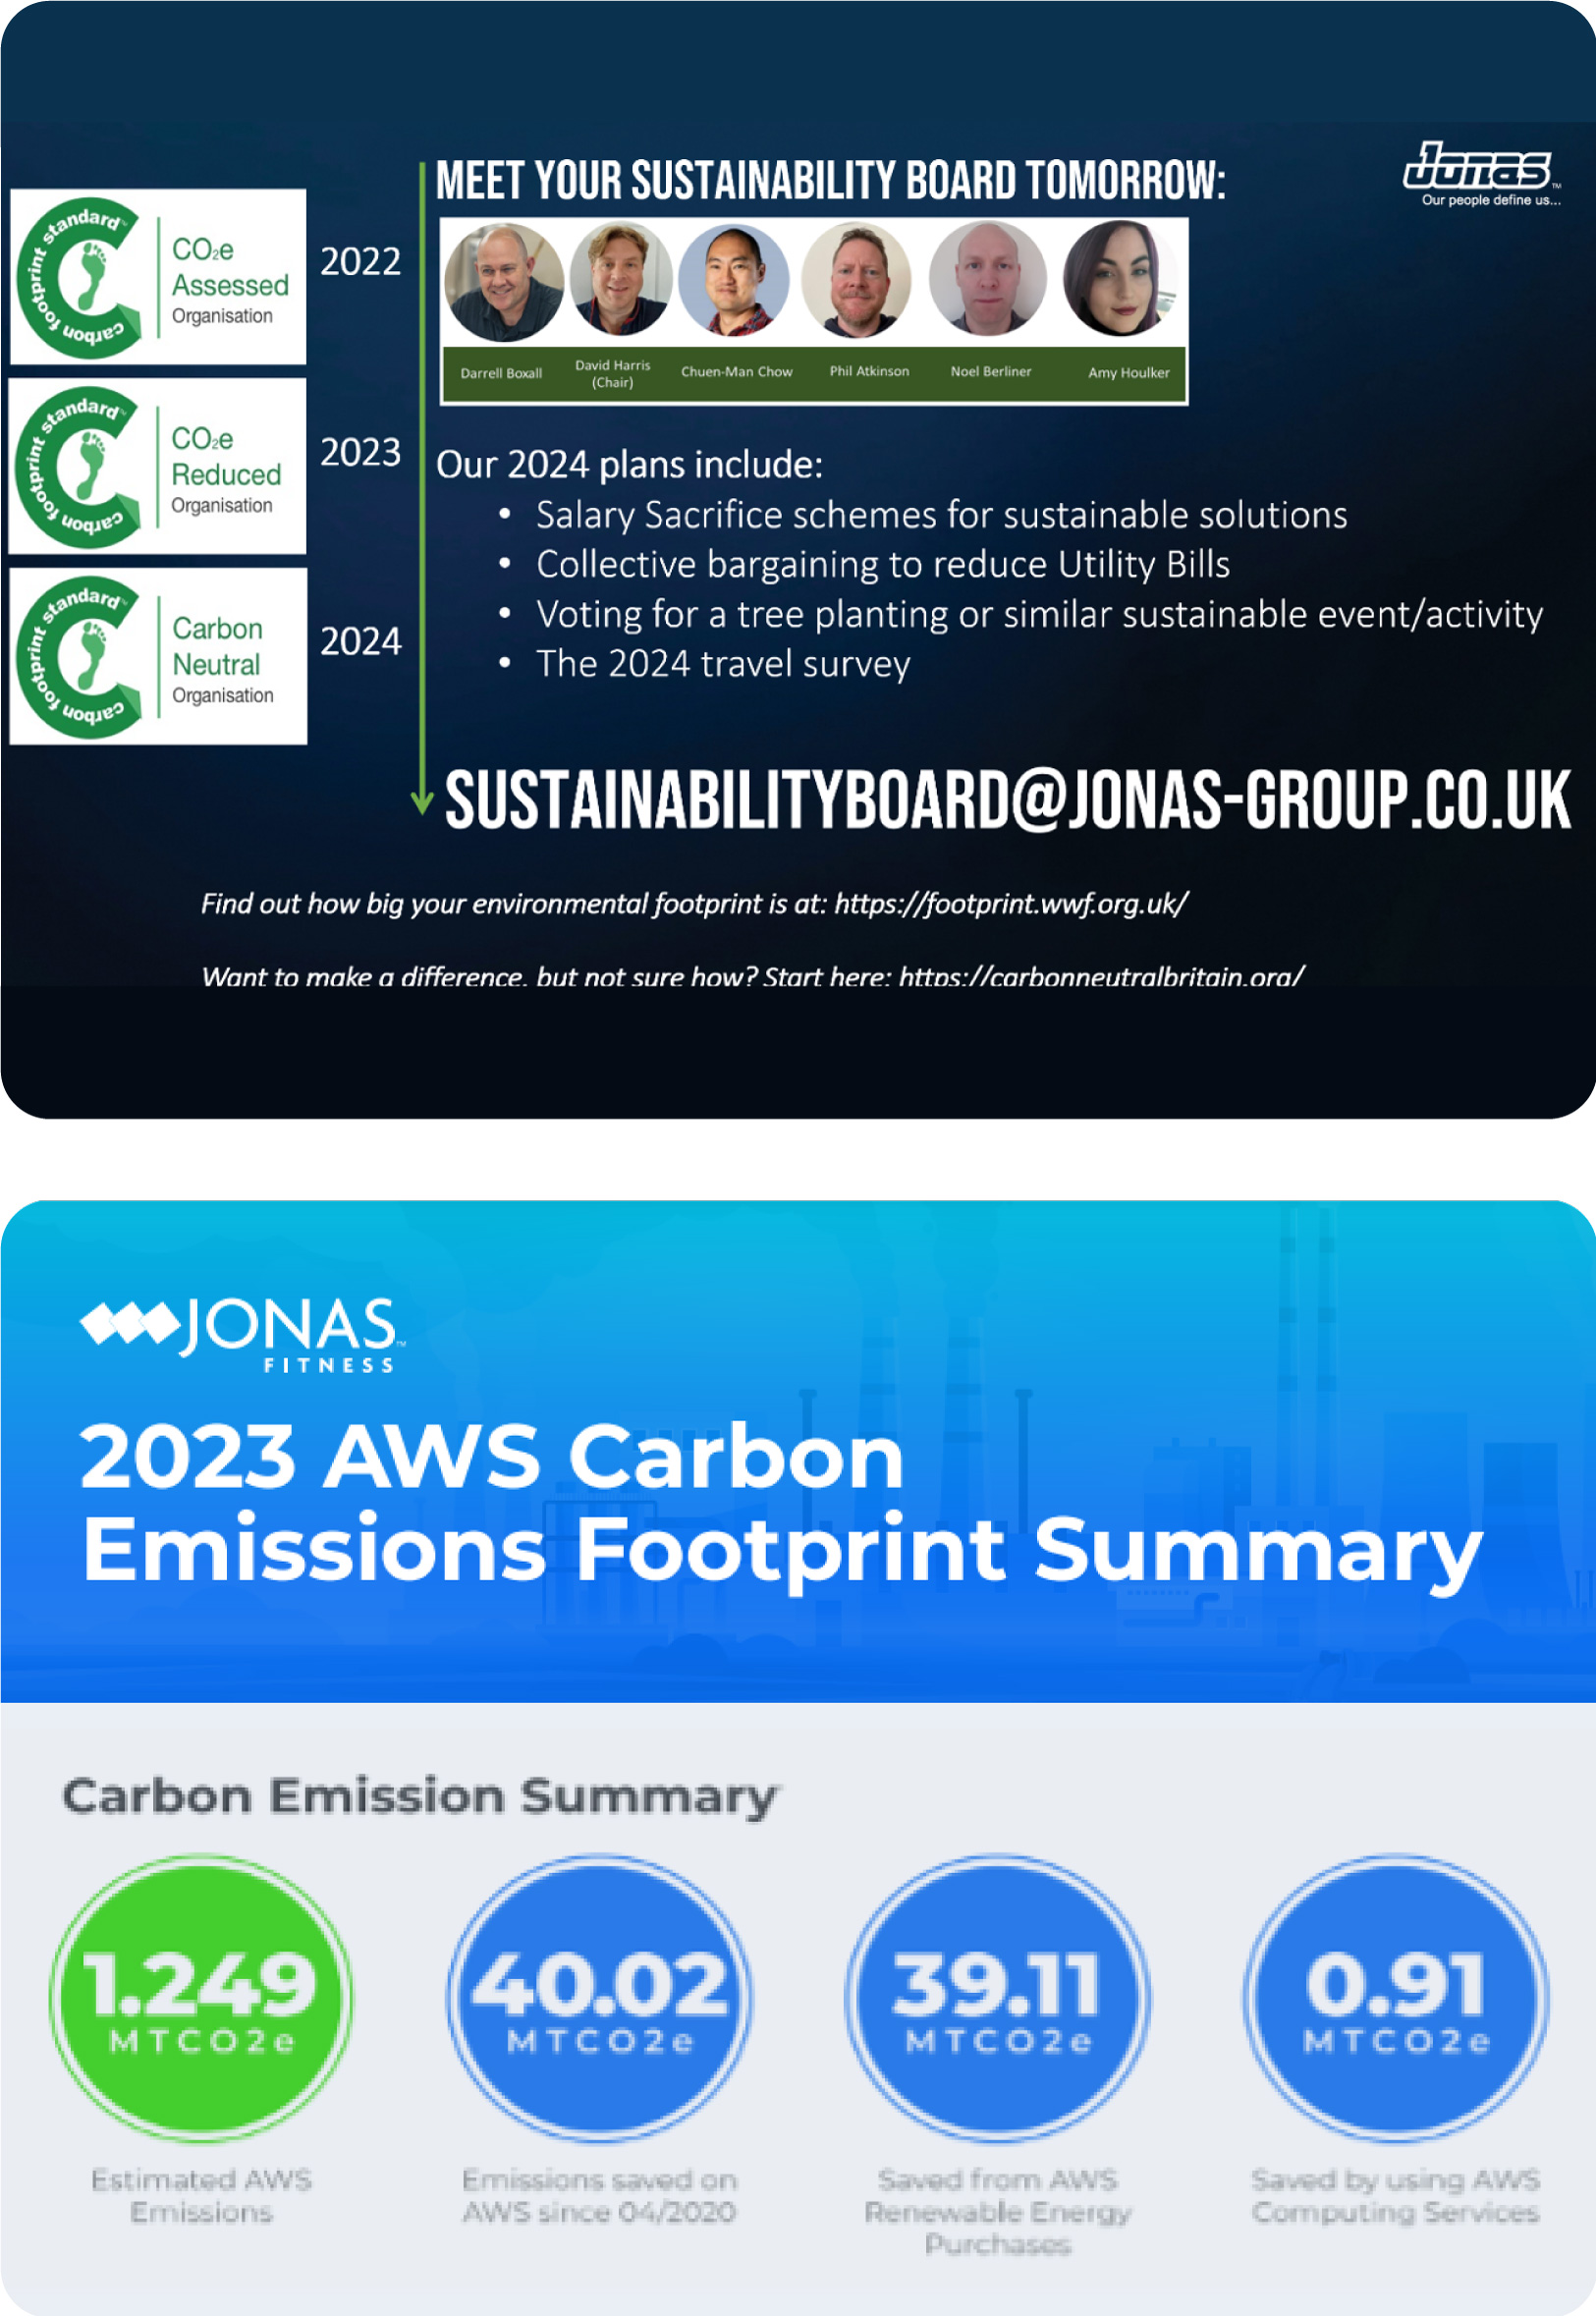 Jonas, 2023 AWS Carbon Emissions Footprint Summary